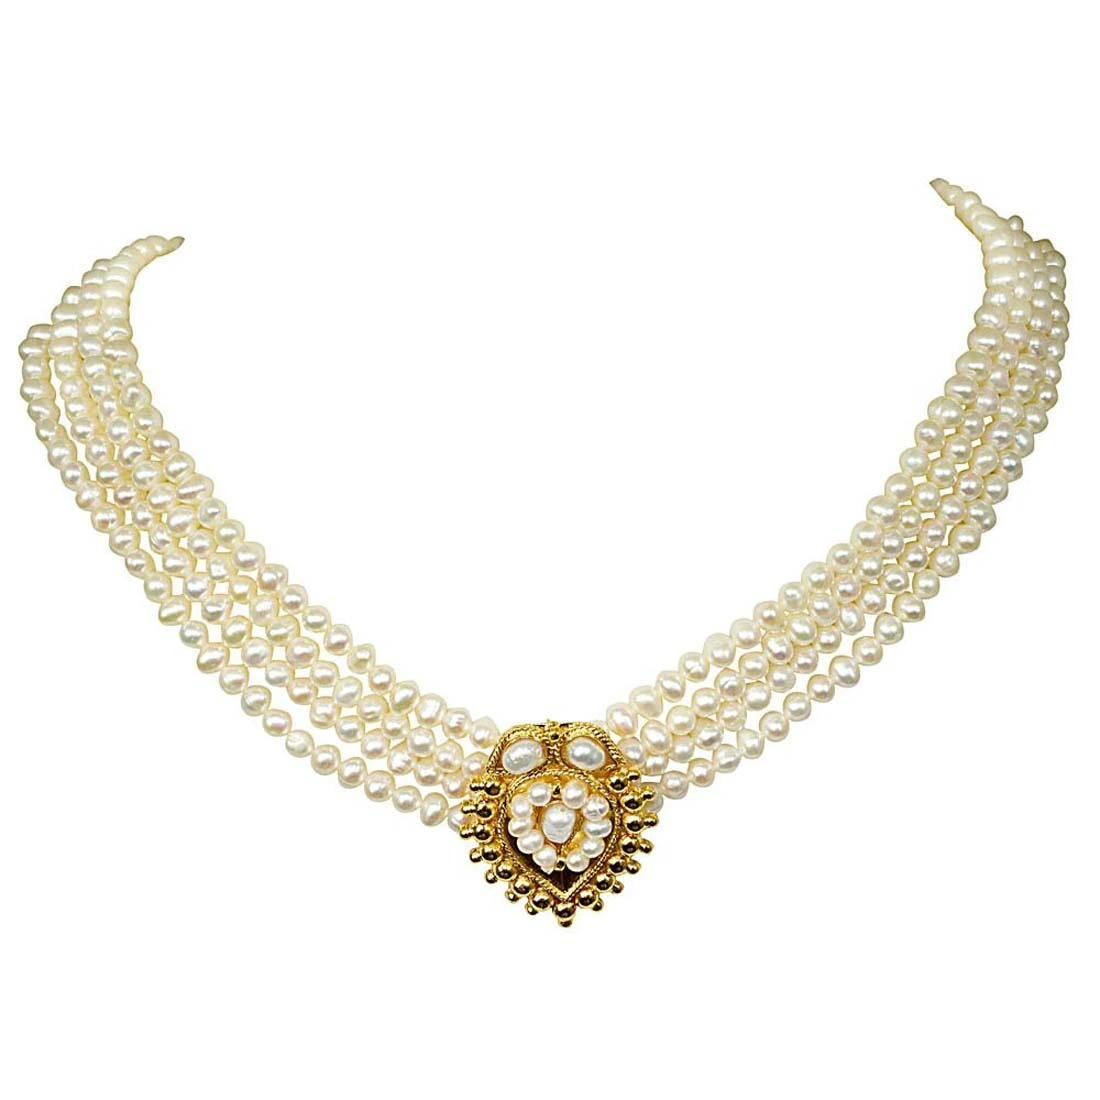 Pearl Jewellery Deals